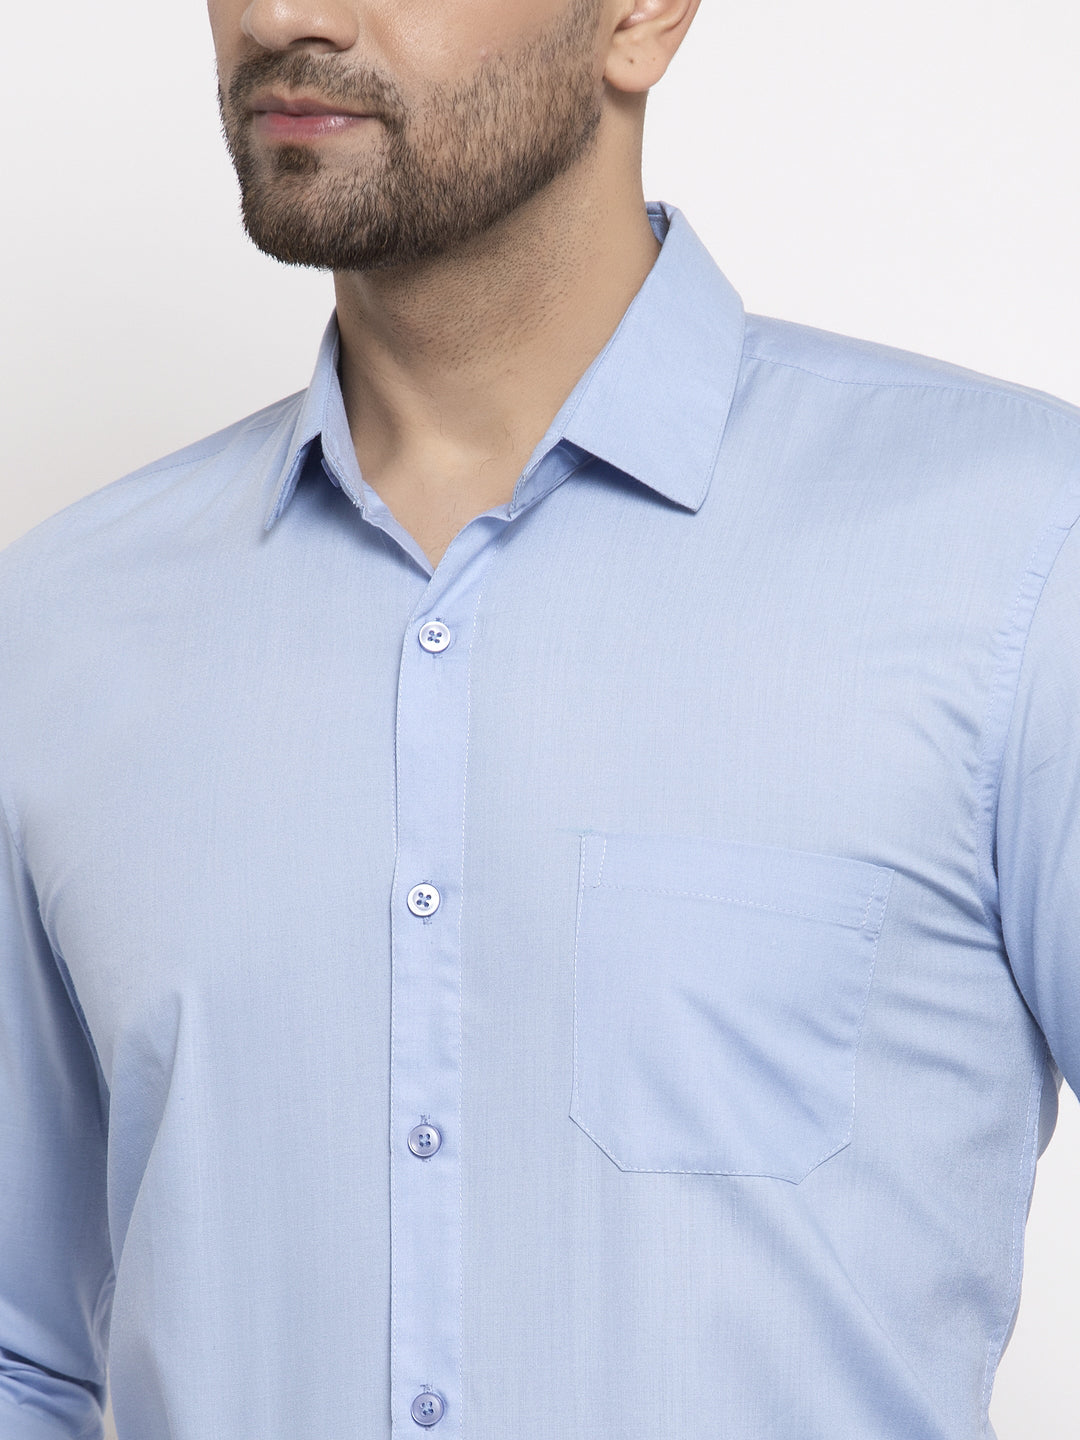 Jainish Men's Cotton Solid Firozi Blue Formal Shirt's